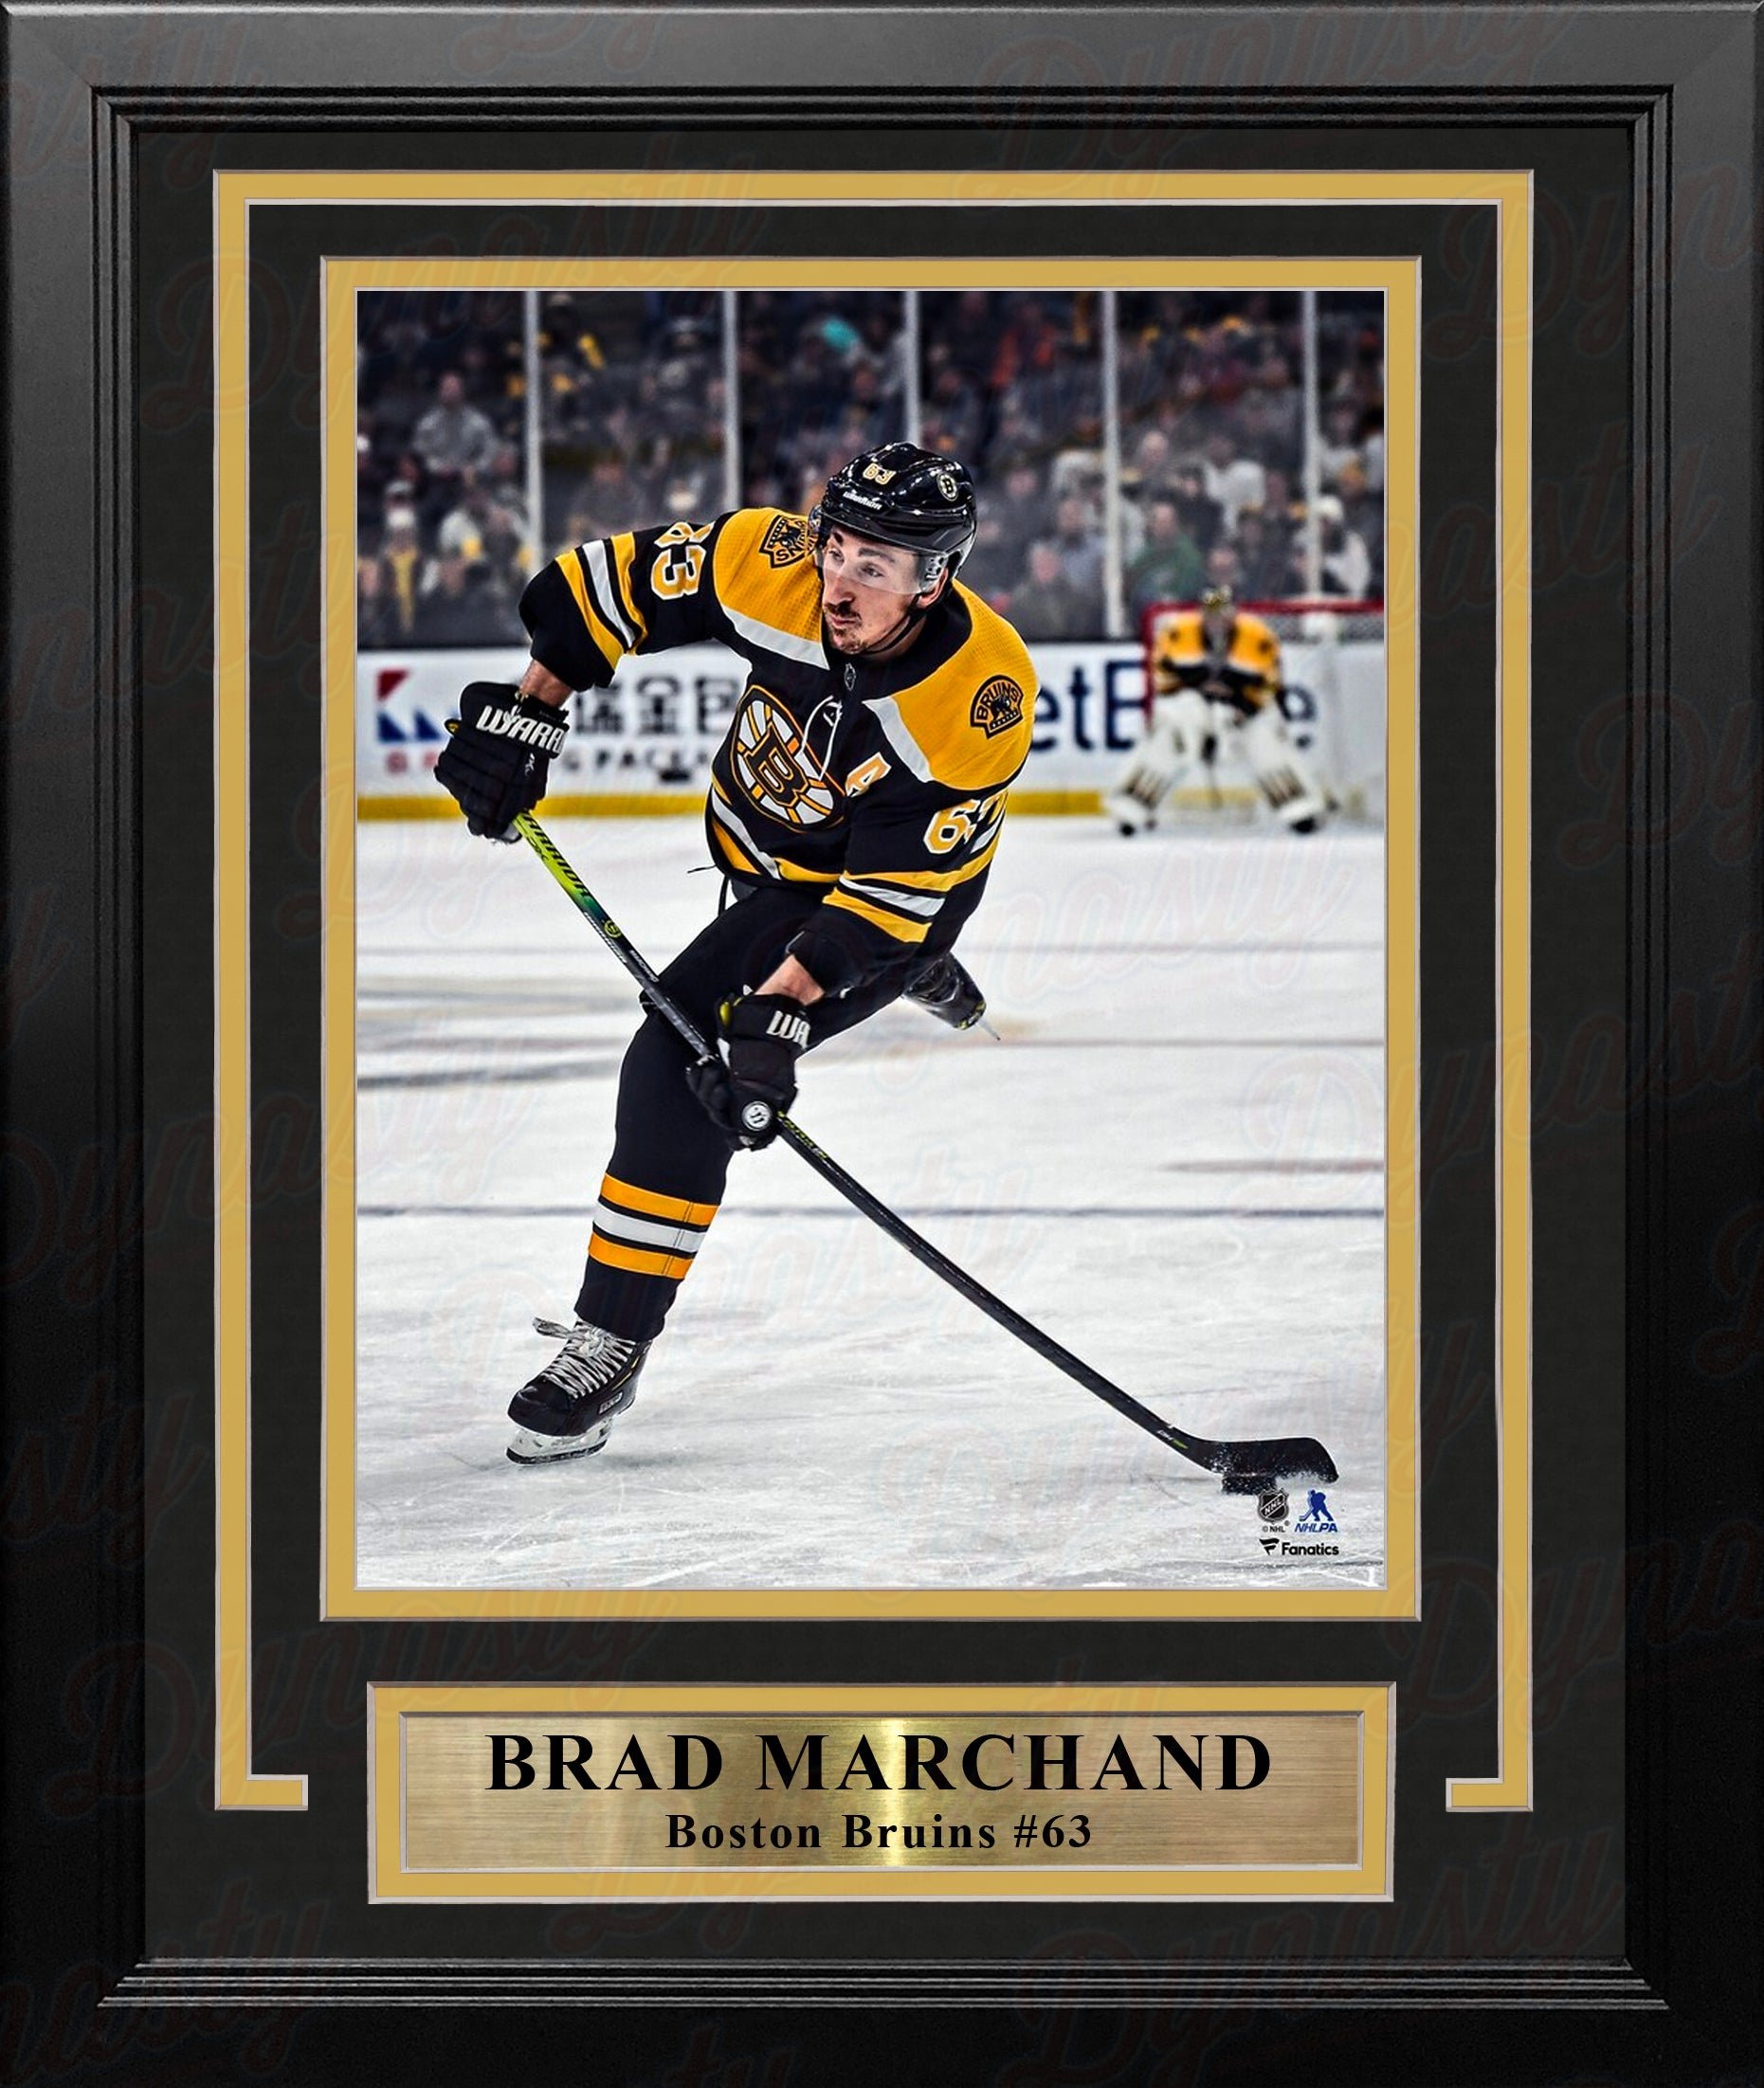 Brad Marchand in Action Boston Bruins 8" x 10" Framed Hockey Photo - Dynasty Sports & Framing 